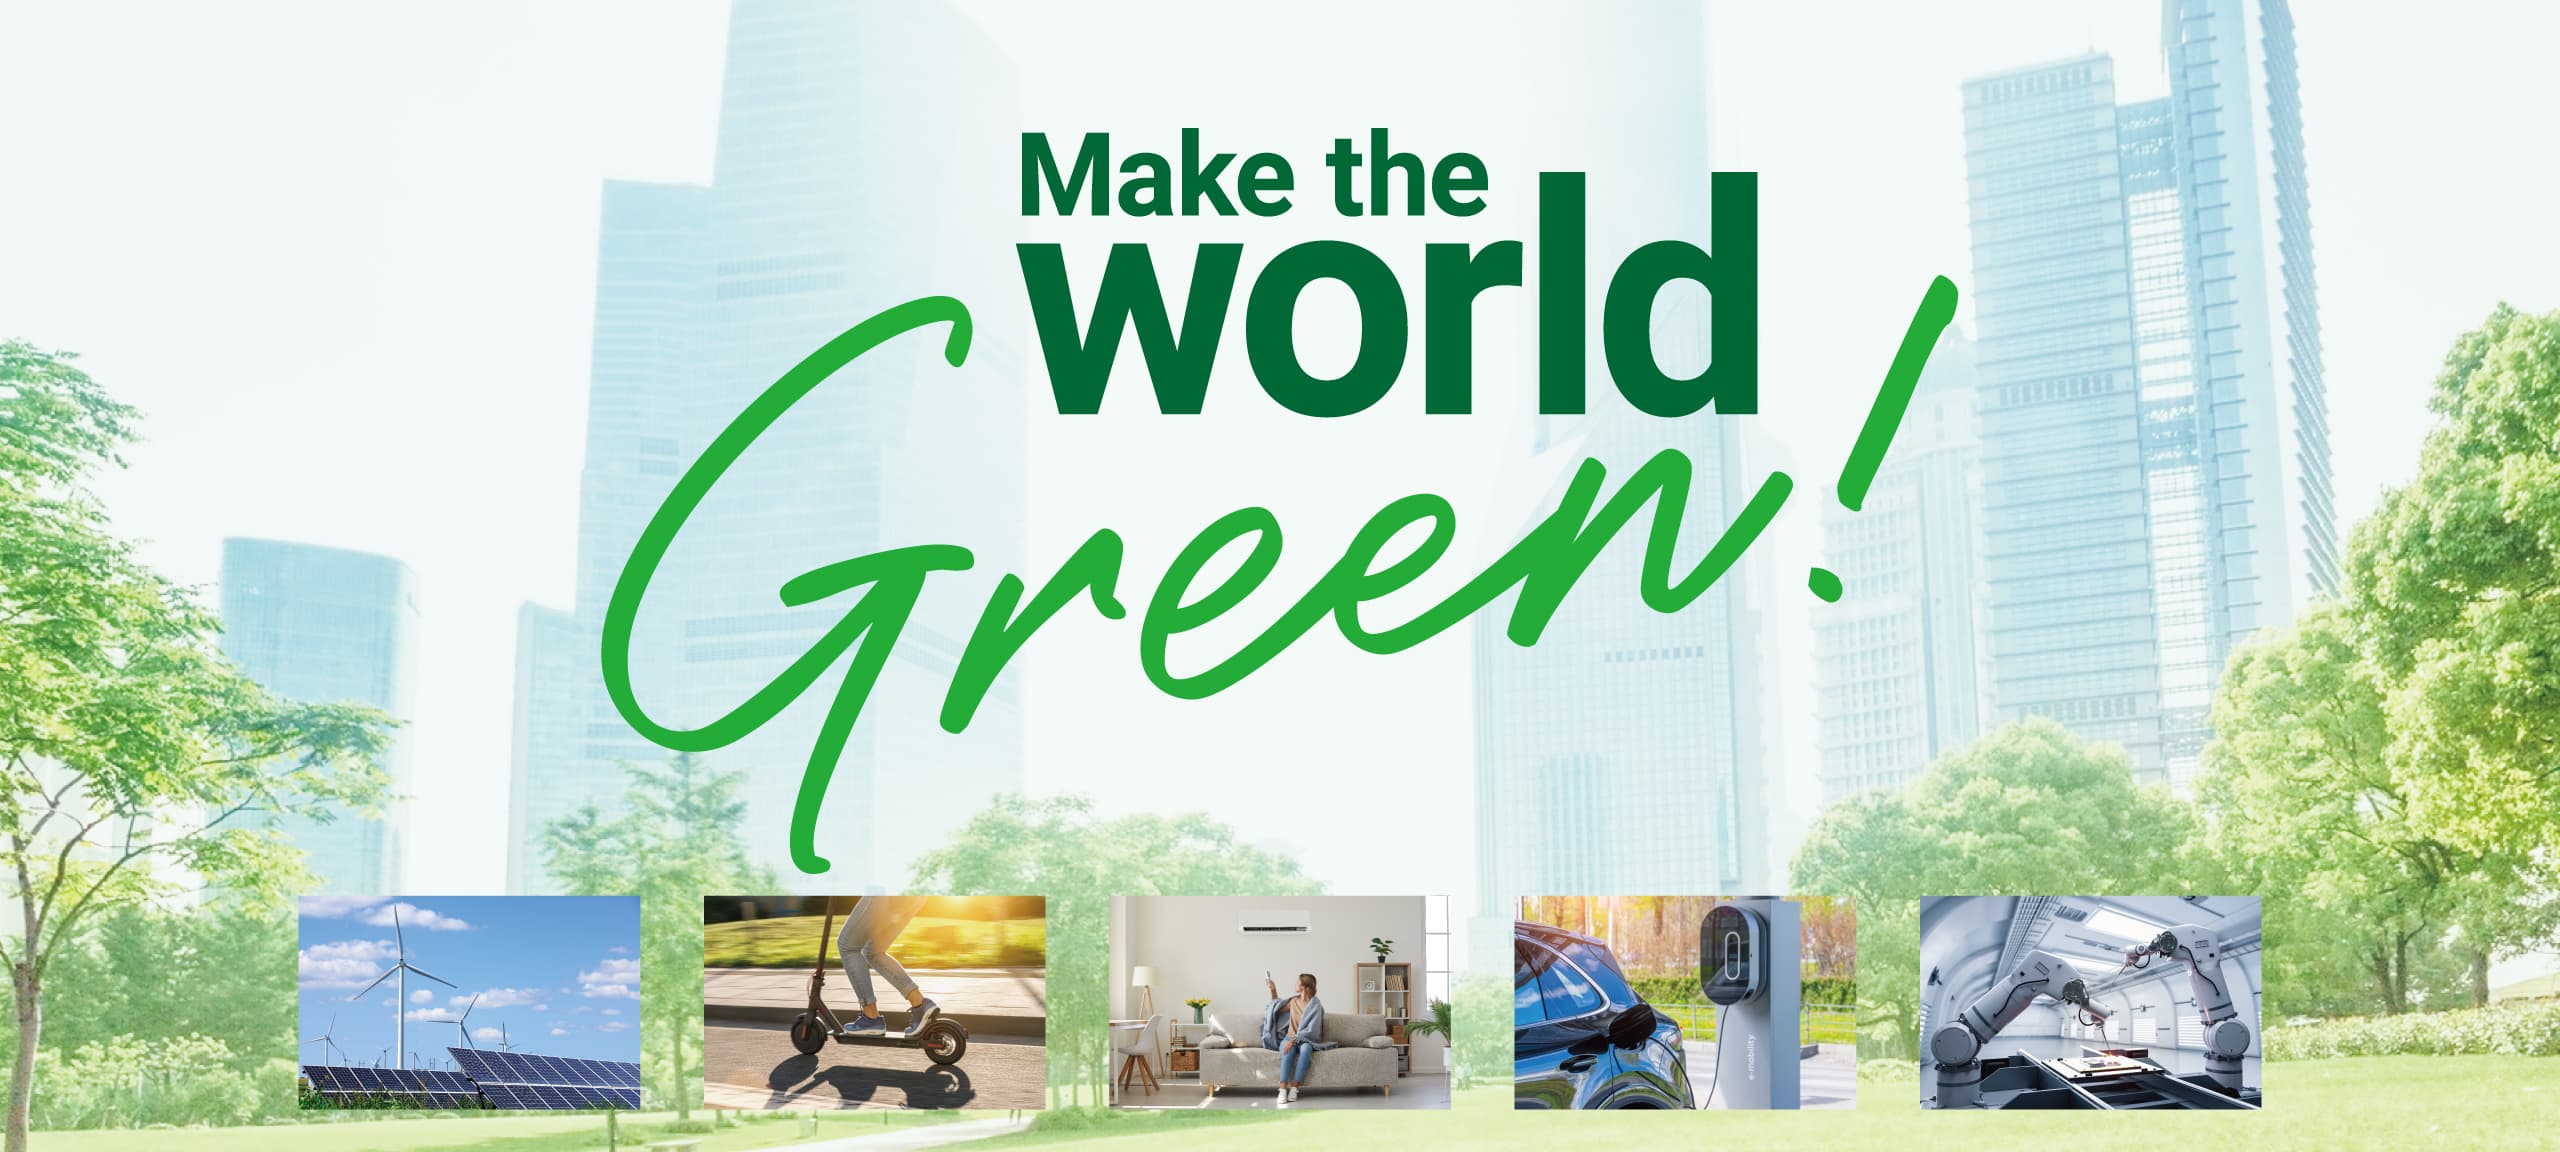 Make the world Green!